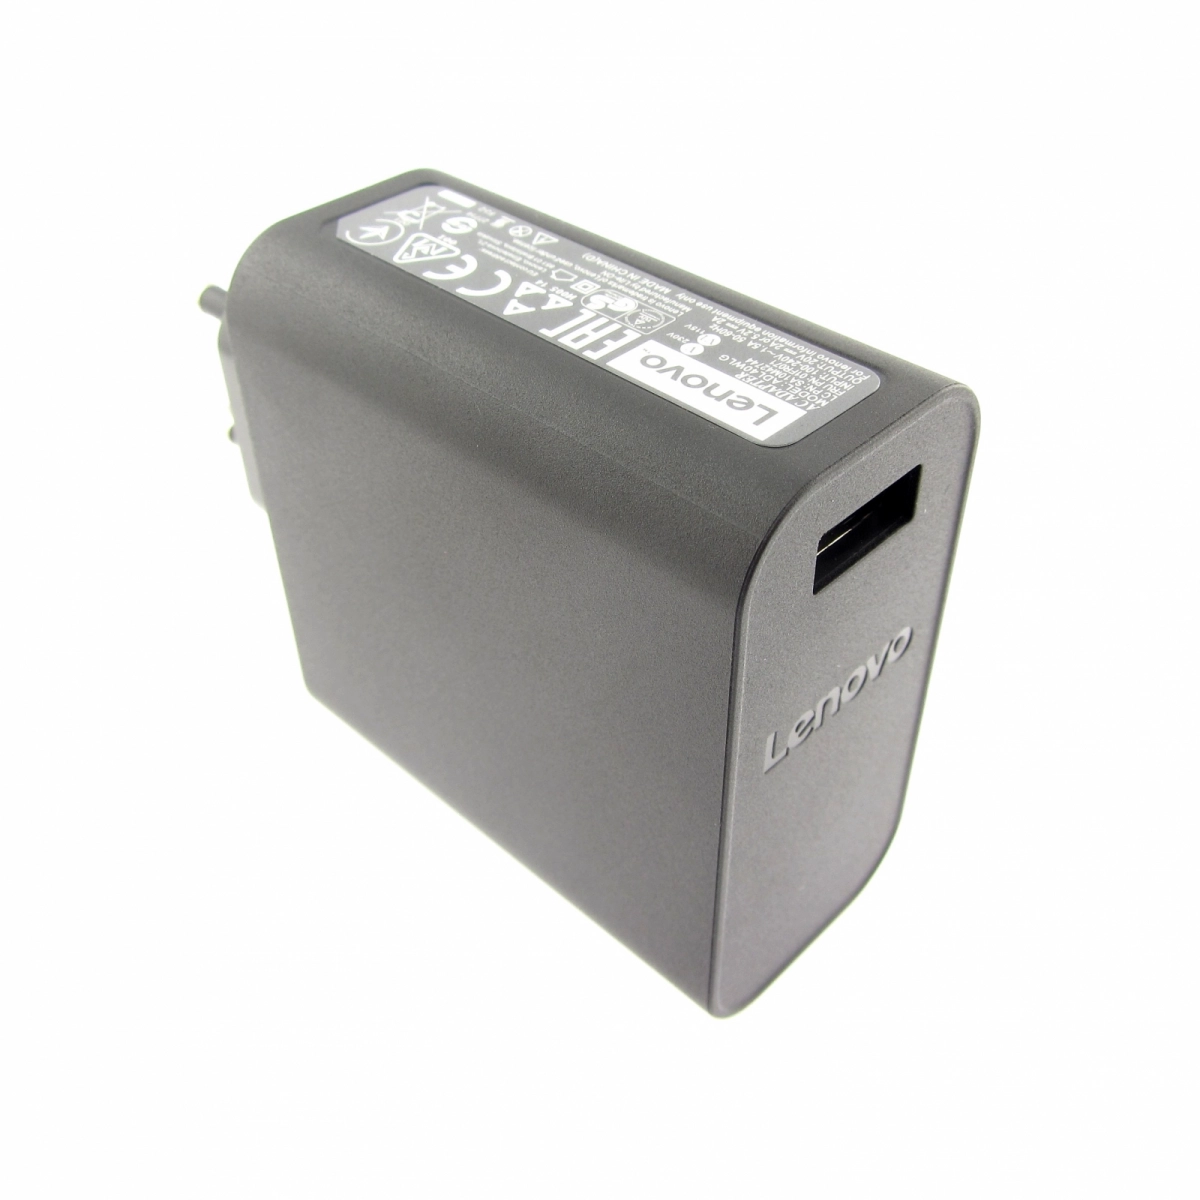 Original Netzteil für LENOVO ADL40WDJ 36200562 36200563, 20V, 2A Stecker USB, ohne USB-Kabel